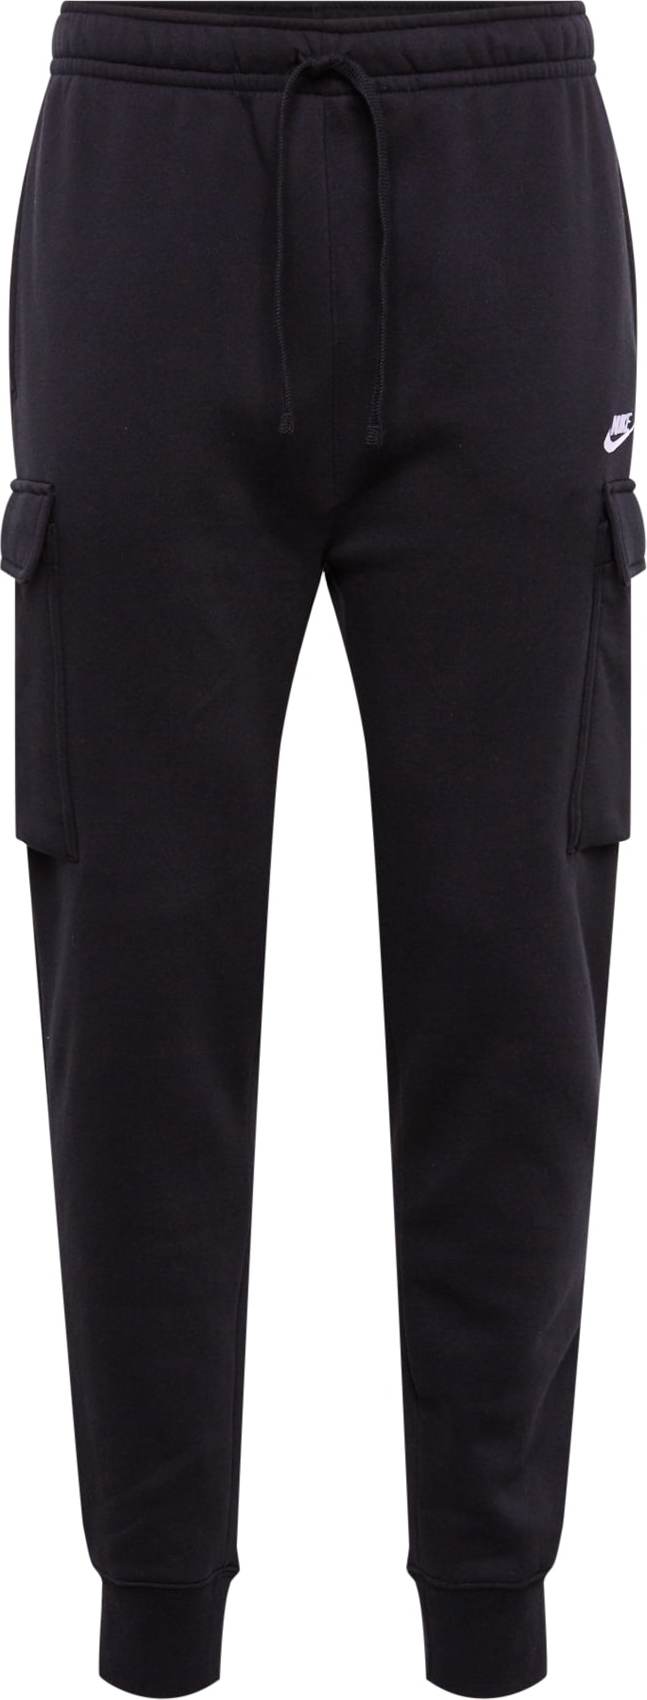 Kalhoty 'Club' Nike Sportswear černá / bílá